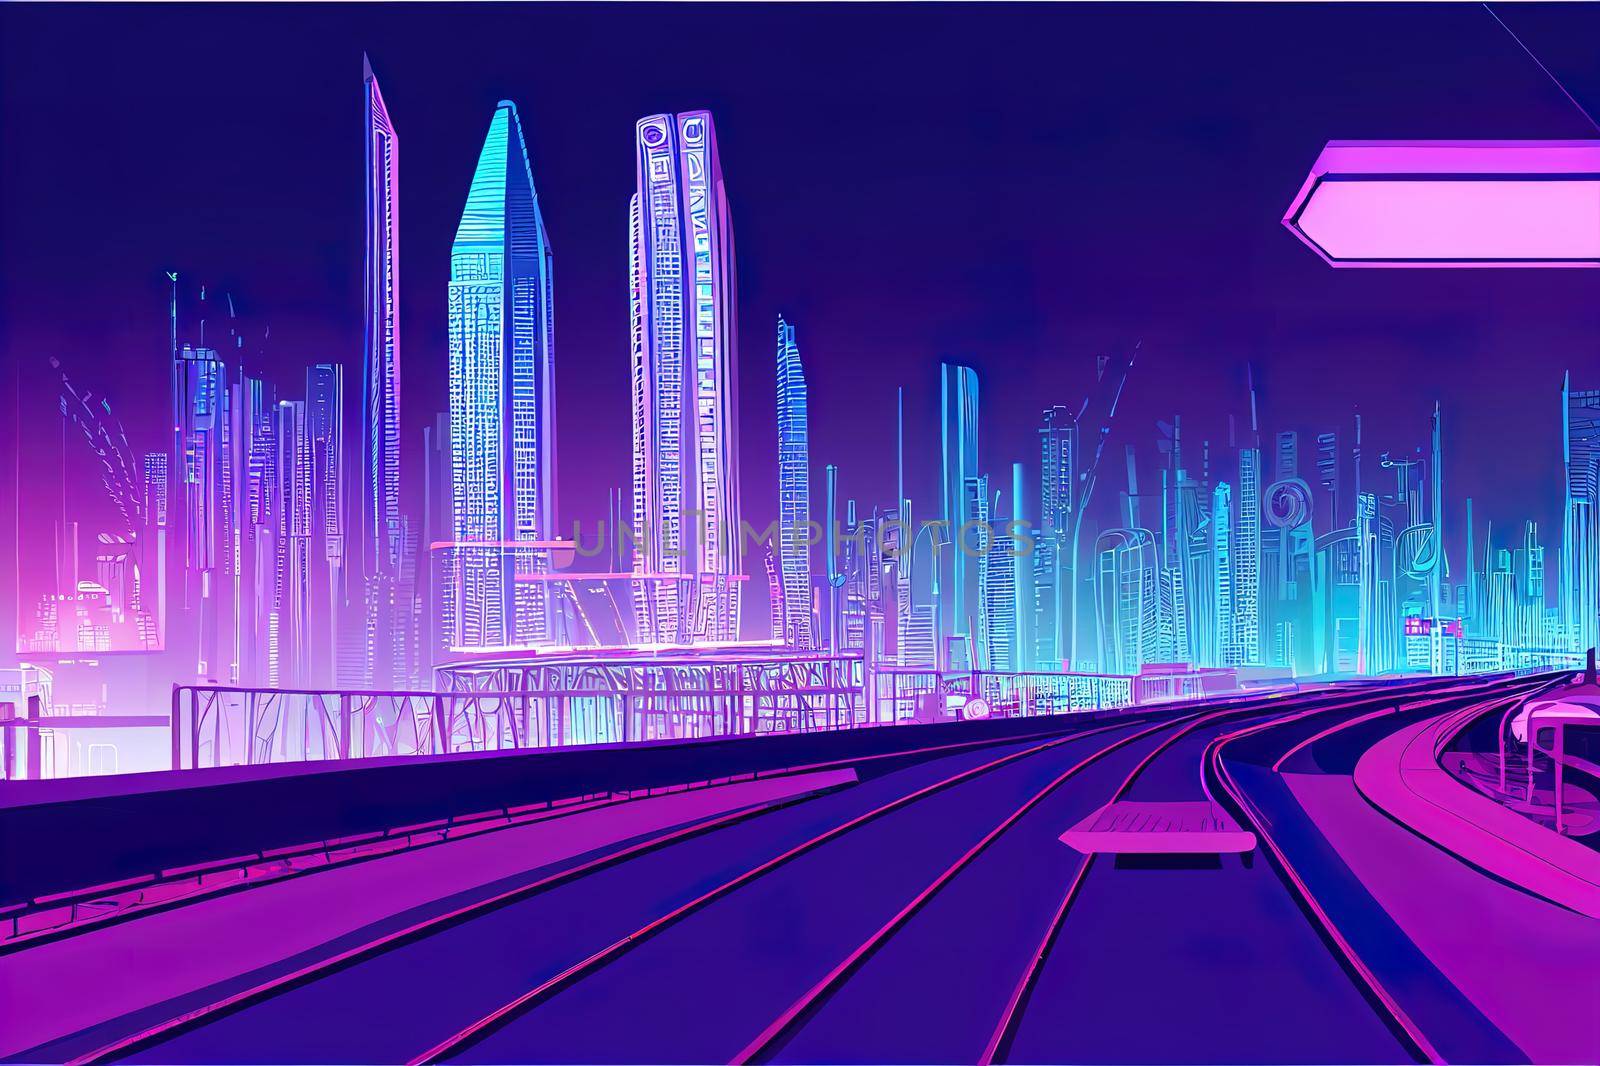 Future metropolis streets night skyline cartoon with illuminated blue and violet neon lights futuristic skyscrapers, bridge, subway railroad over city bay illustration. Sci fi urban background. High quality illustration